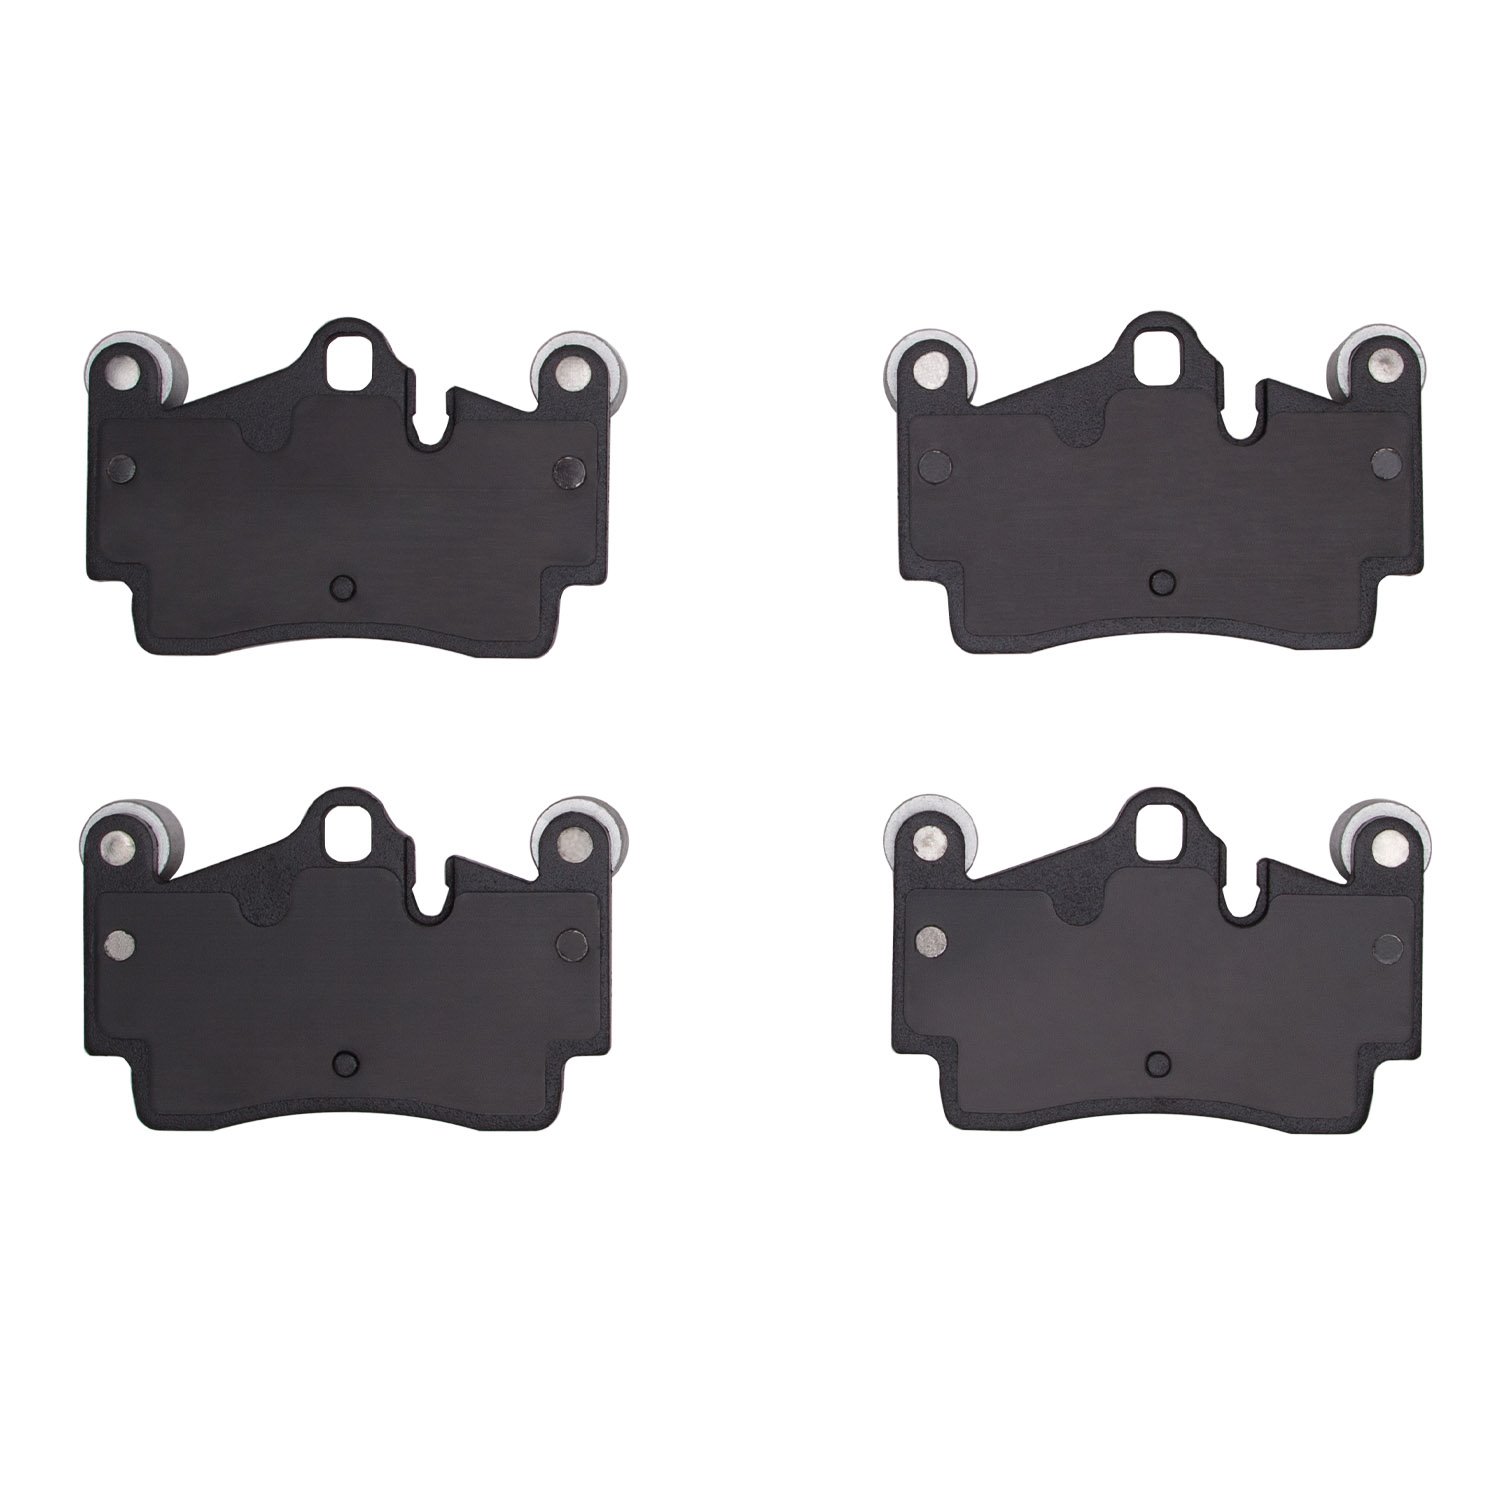 1600-0978-00 5000 Euro Ceramic Brake Pads, 2003-2015 Multiple Makes/Models, Position: Rear